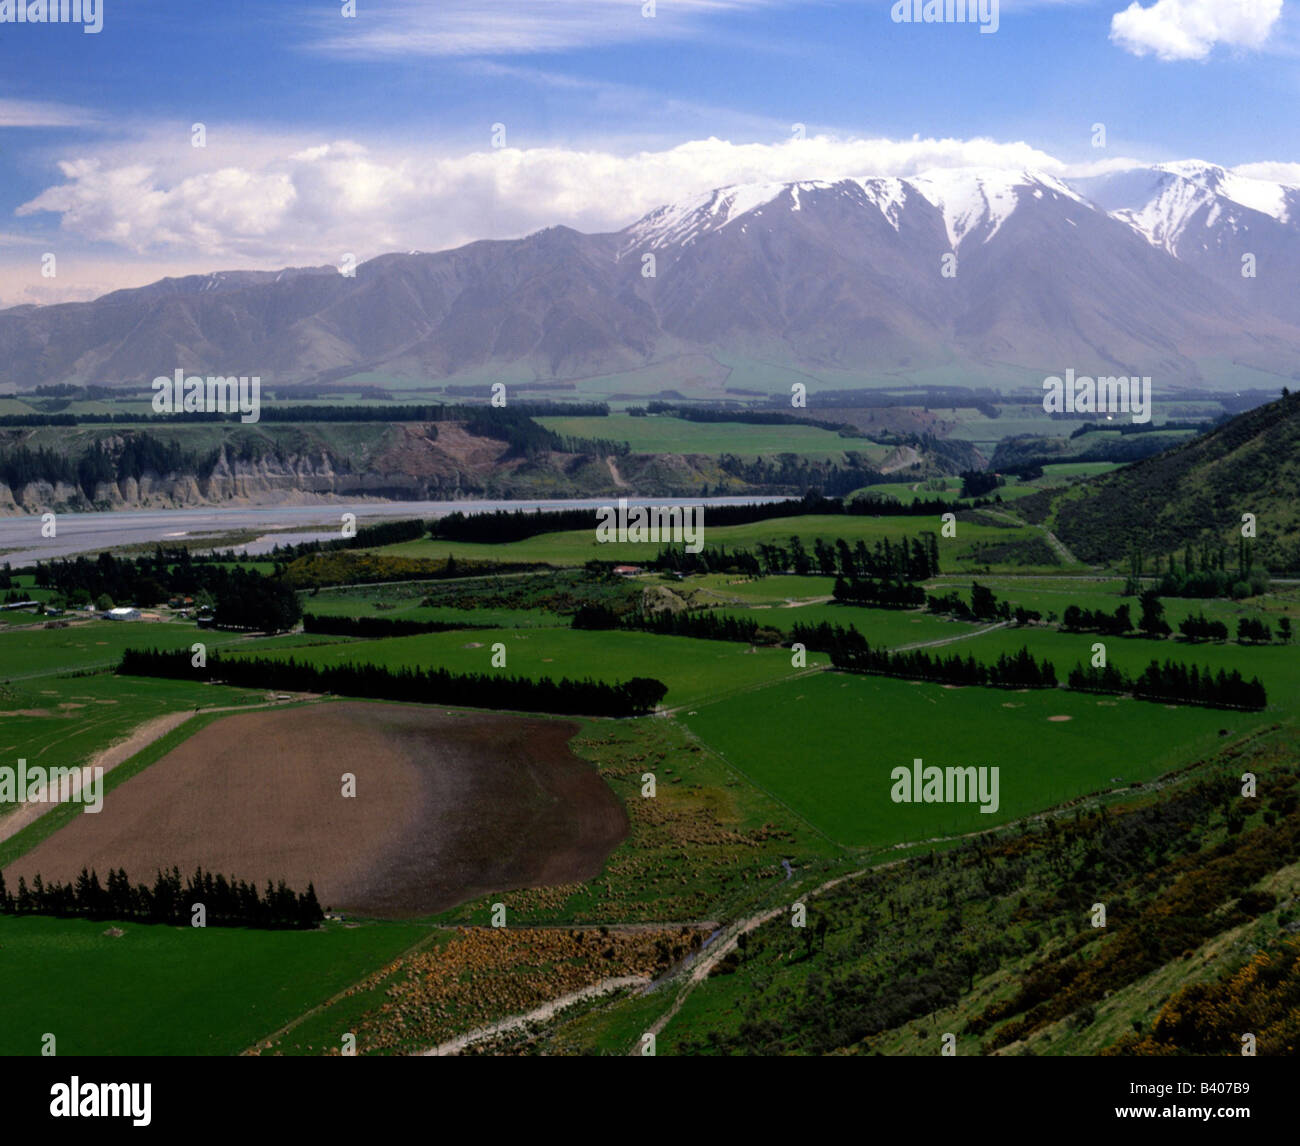 Geografia / viaggi, Nuova Zelanda, isola meridionale, Rakaia River Valley, Foto Stock